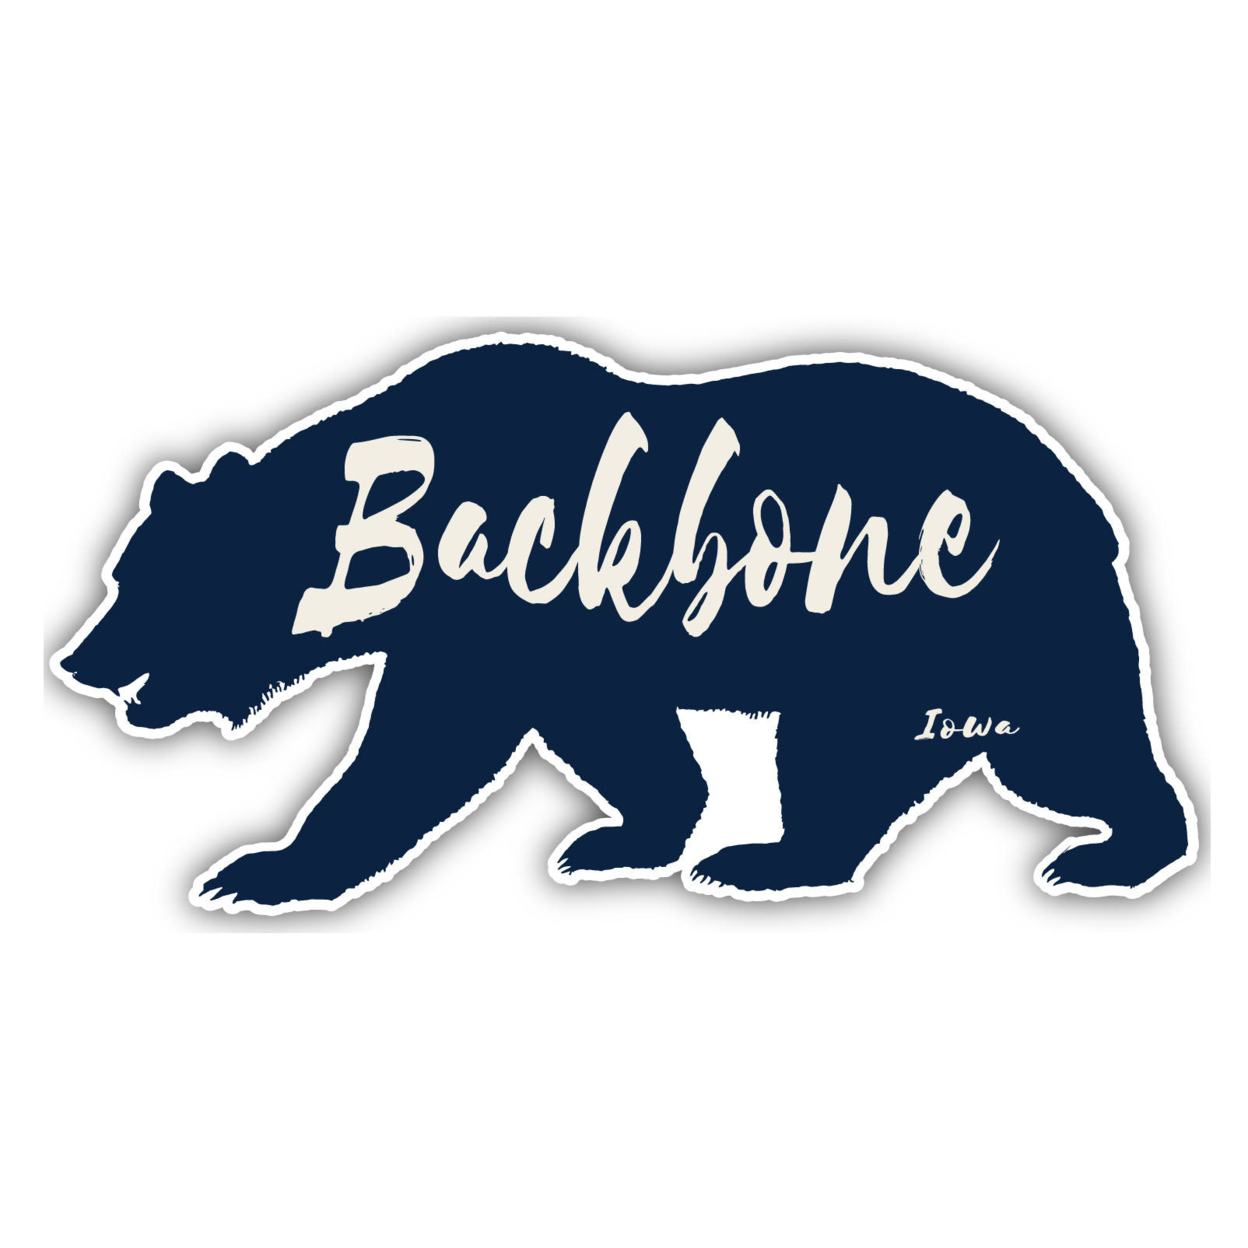 Backbone Iowa Souvenir Decorative Stickers (Choose Theme And Size) - Single Unit, 6-Inch, Bear